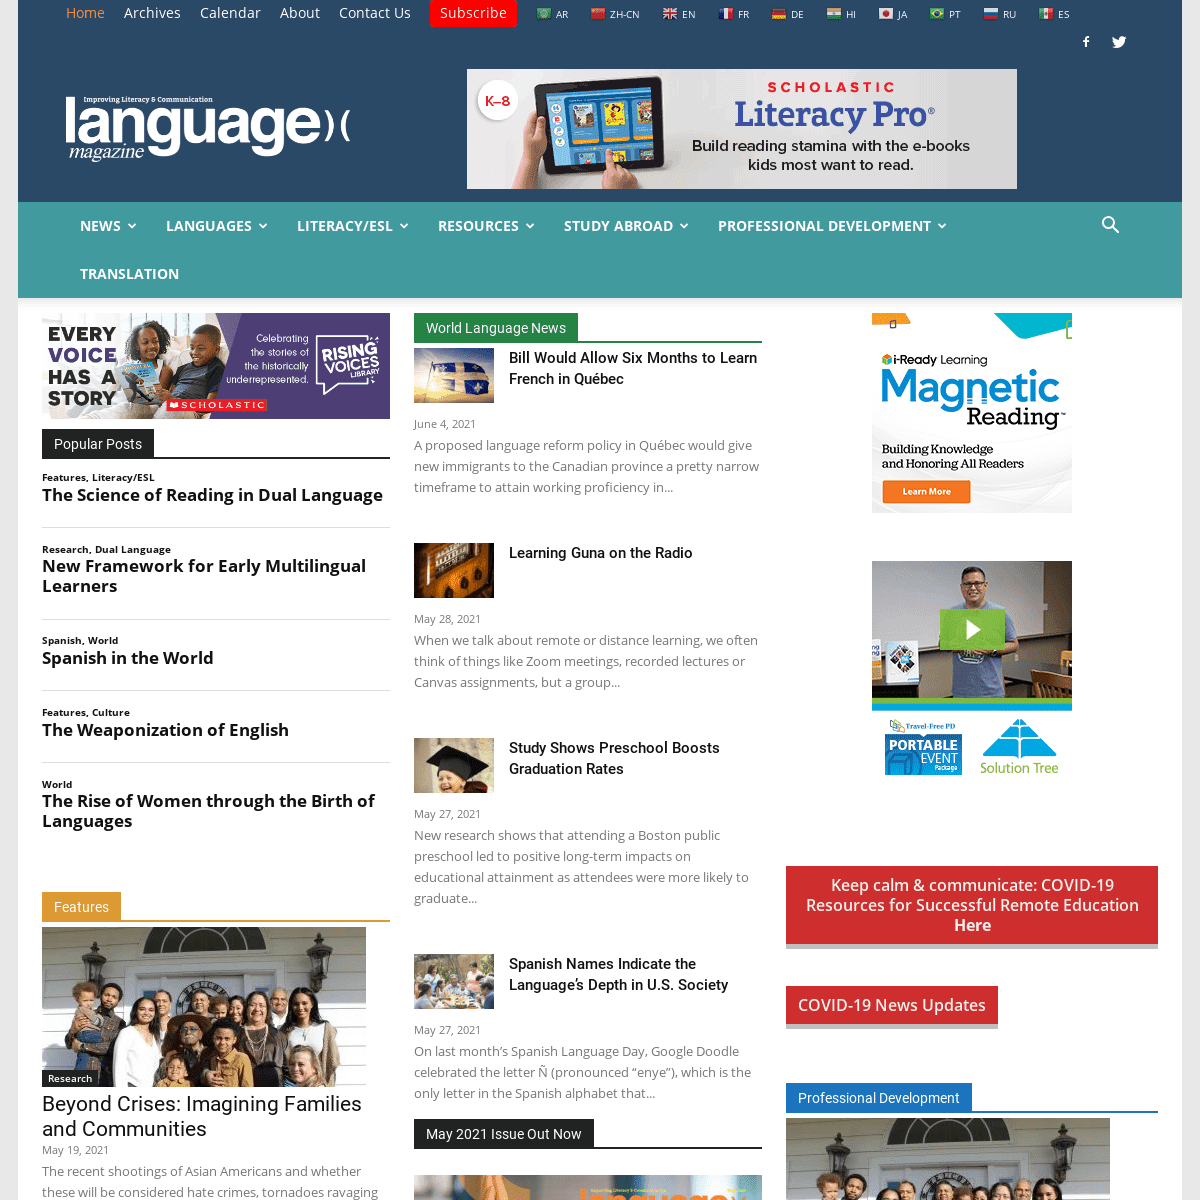 A complete backup of https://languagemagazine.com